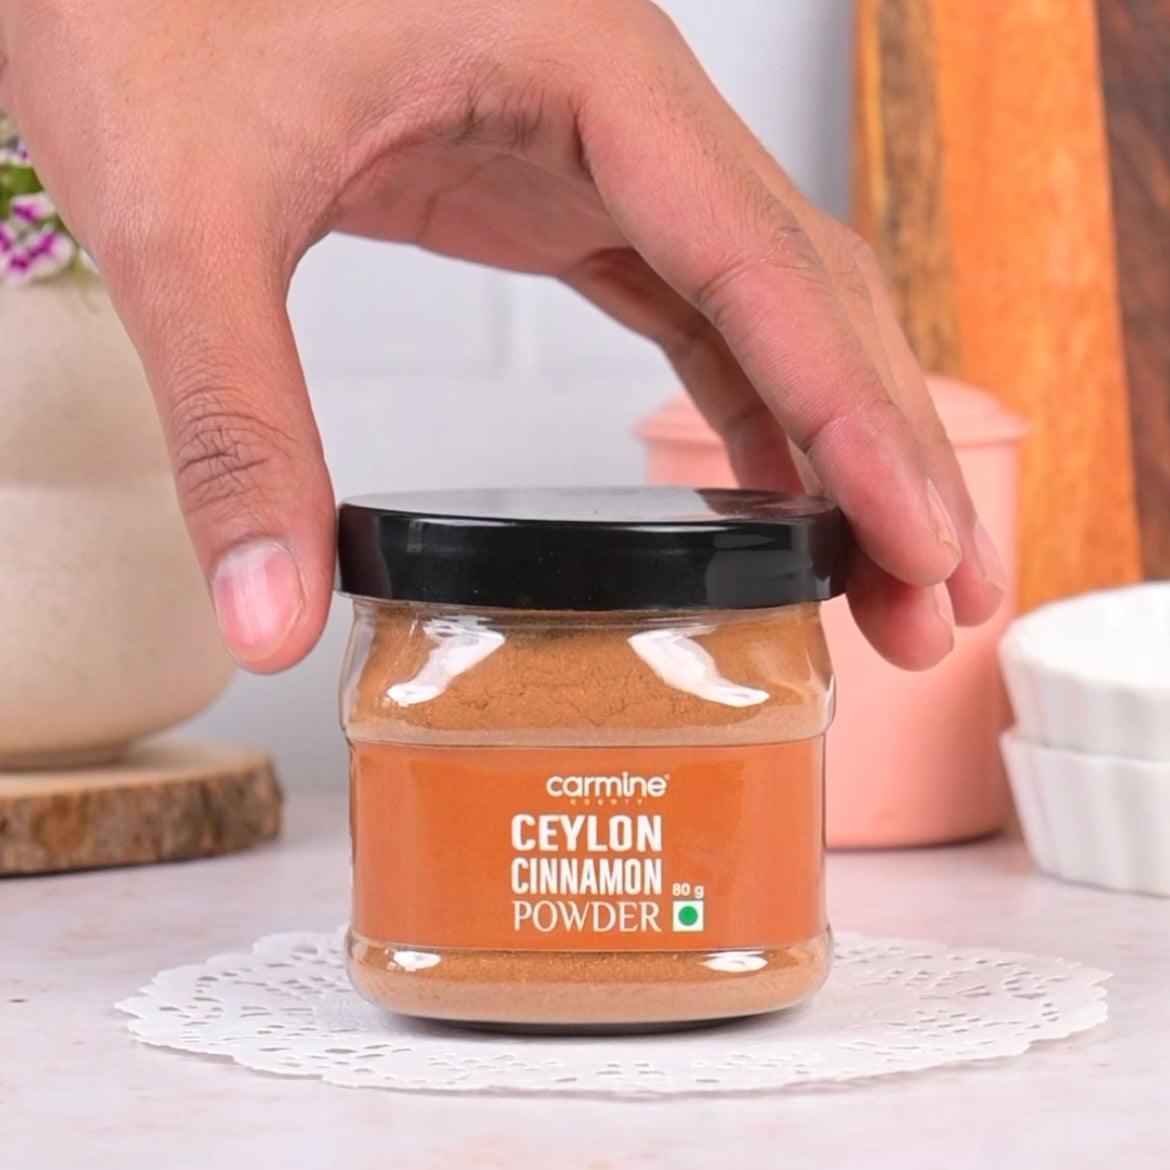 Carmine County Ceylon Cinnamon Powder 80 g (True Sri Lankan Cinnamon)